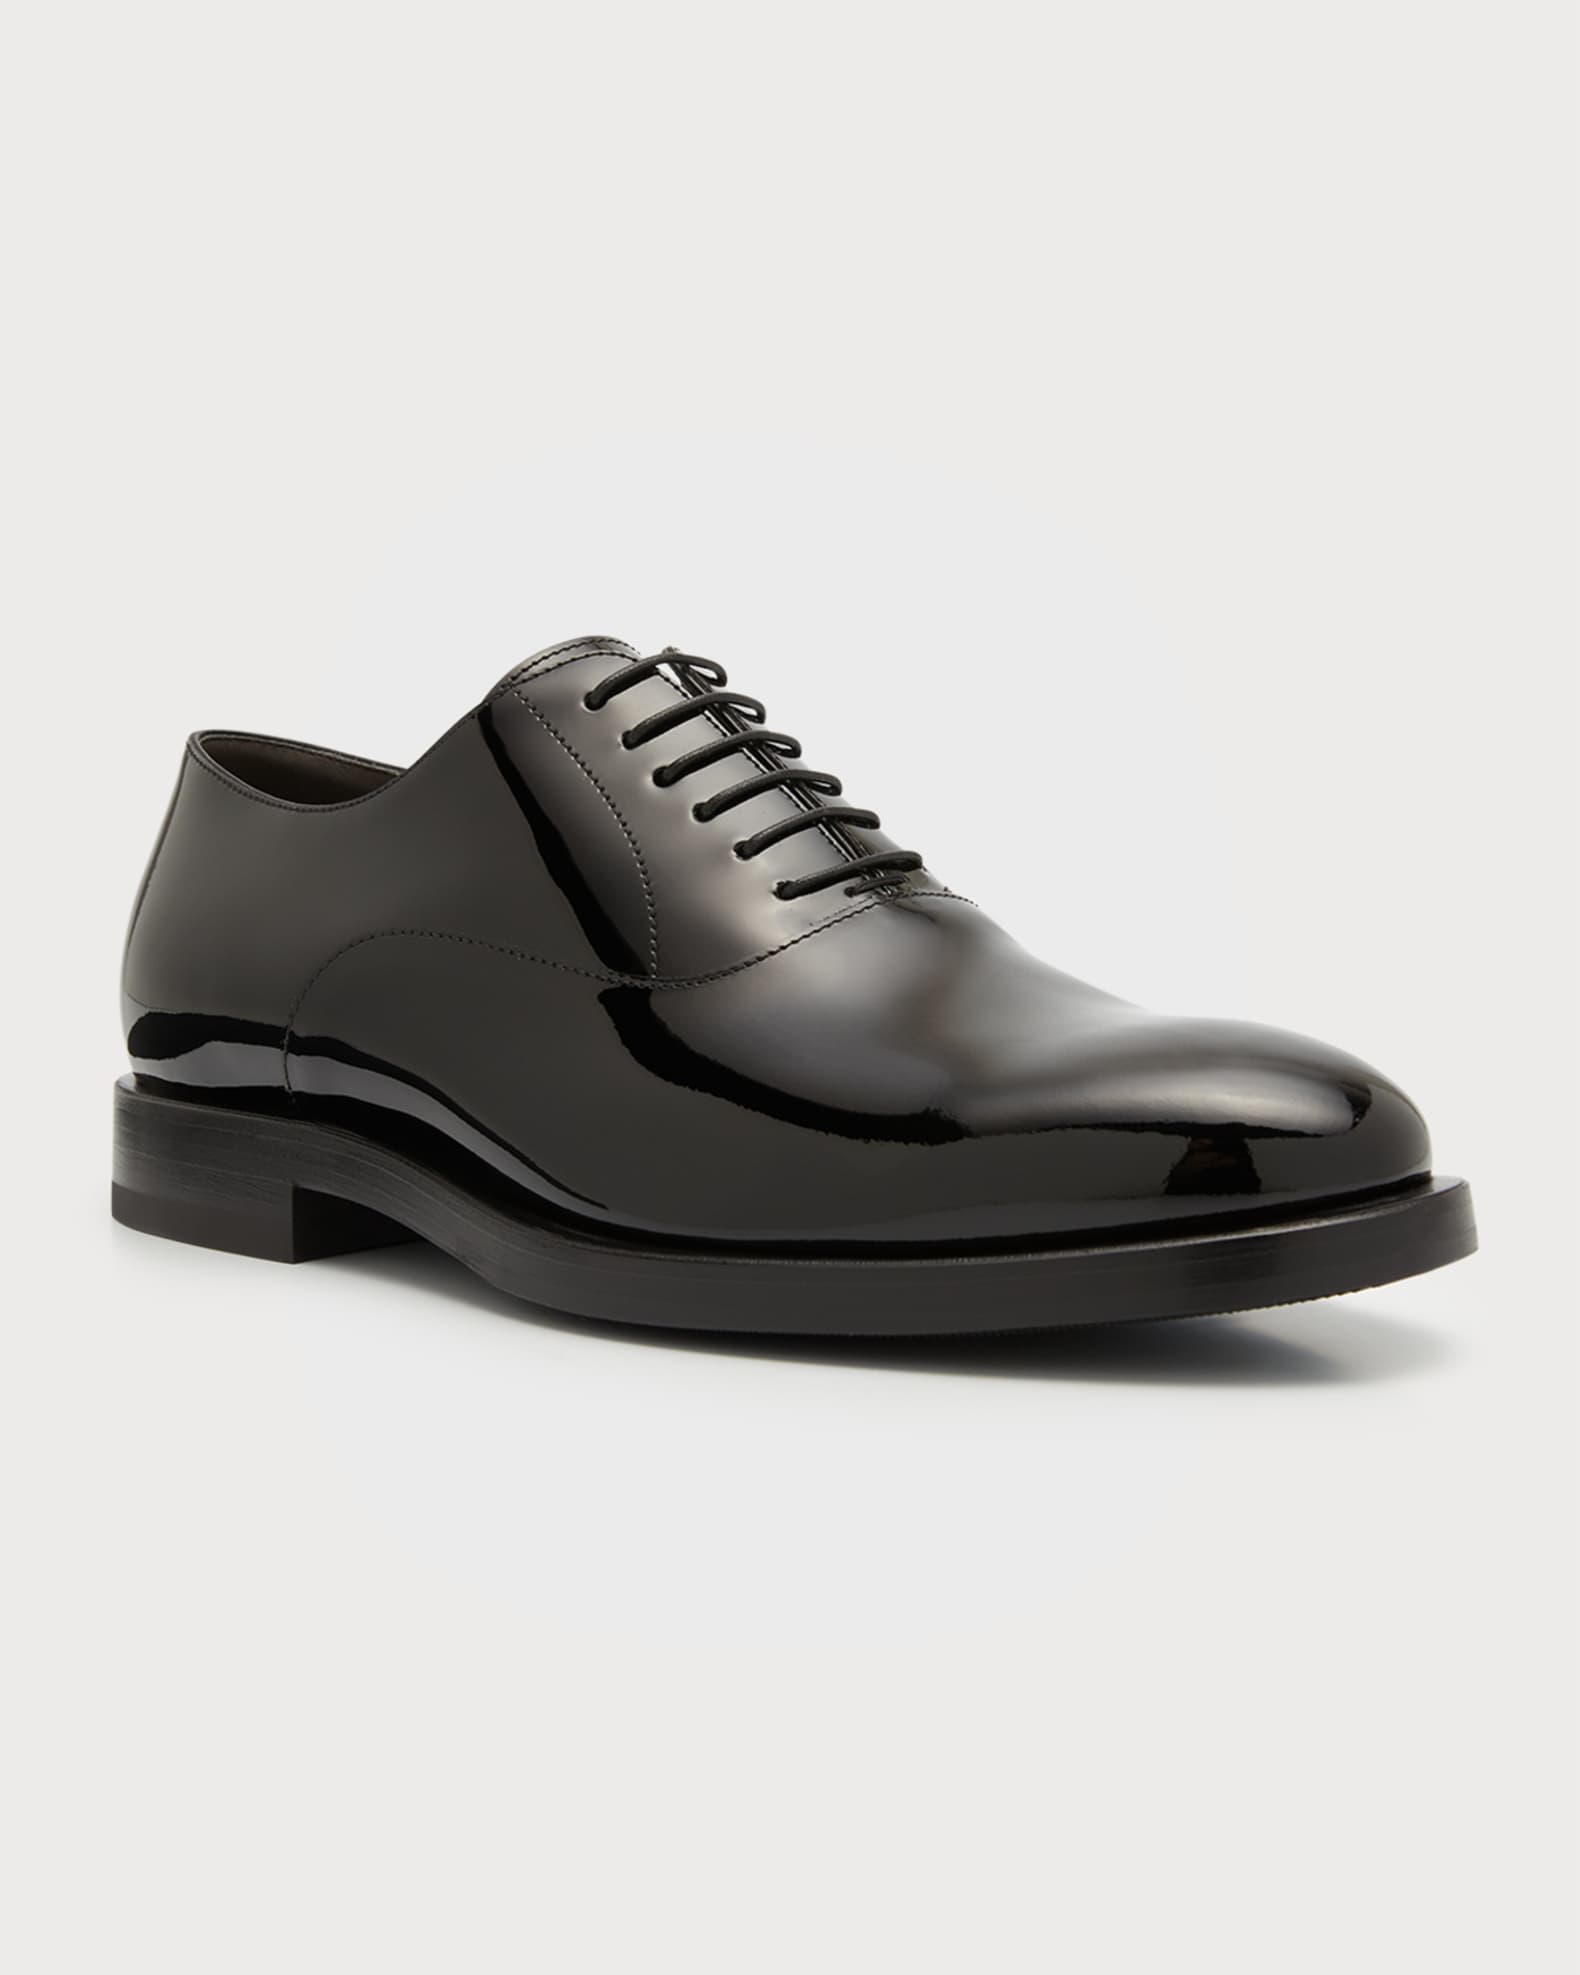 Brunello Cucinelli Men's Patent Leather Tuxedo Oxford Shoes | Neiman Marcus